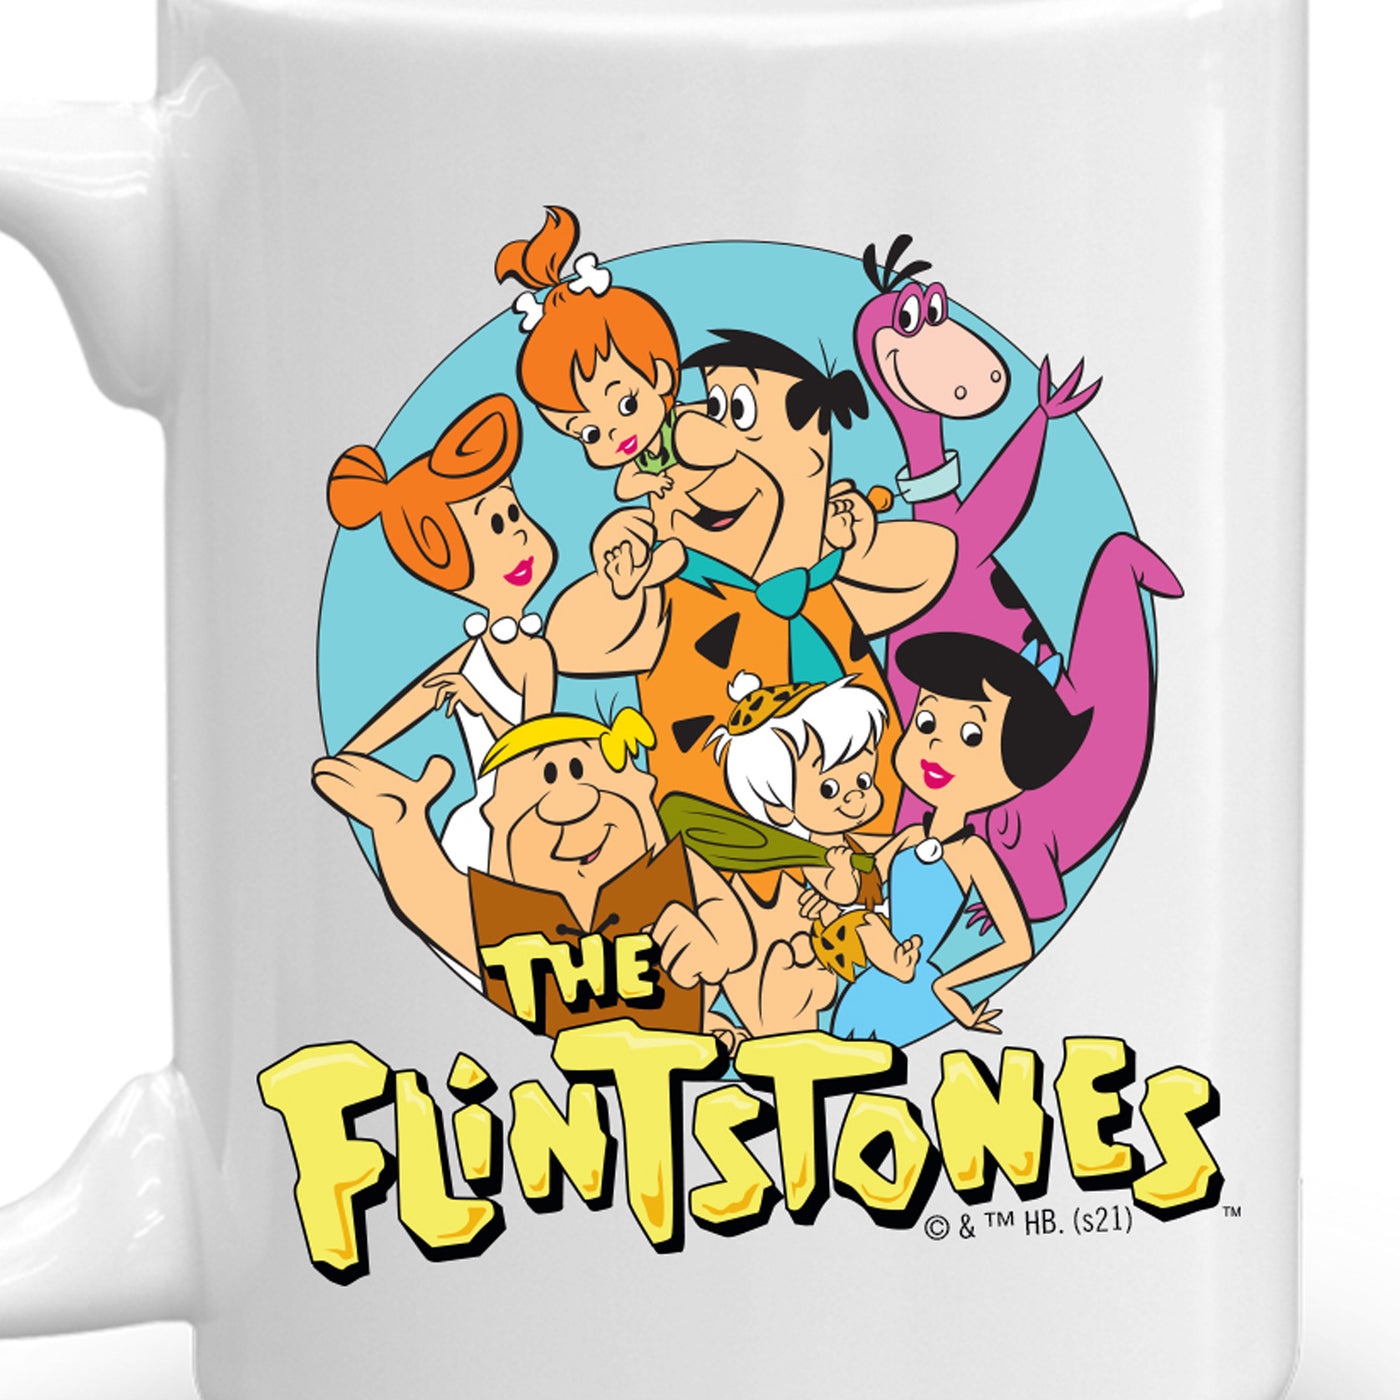 The Flintstones Character Line Up Black Mug